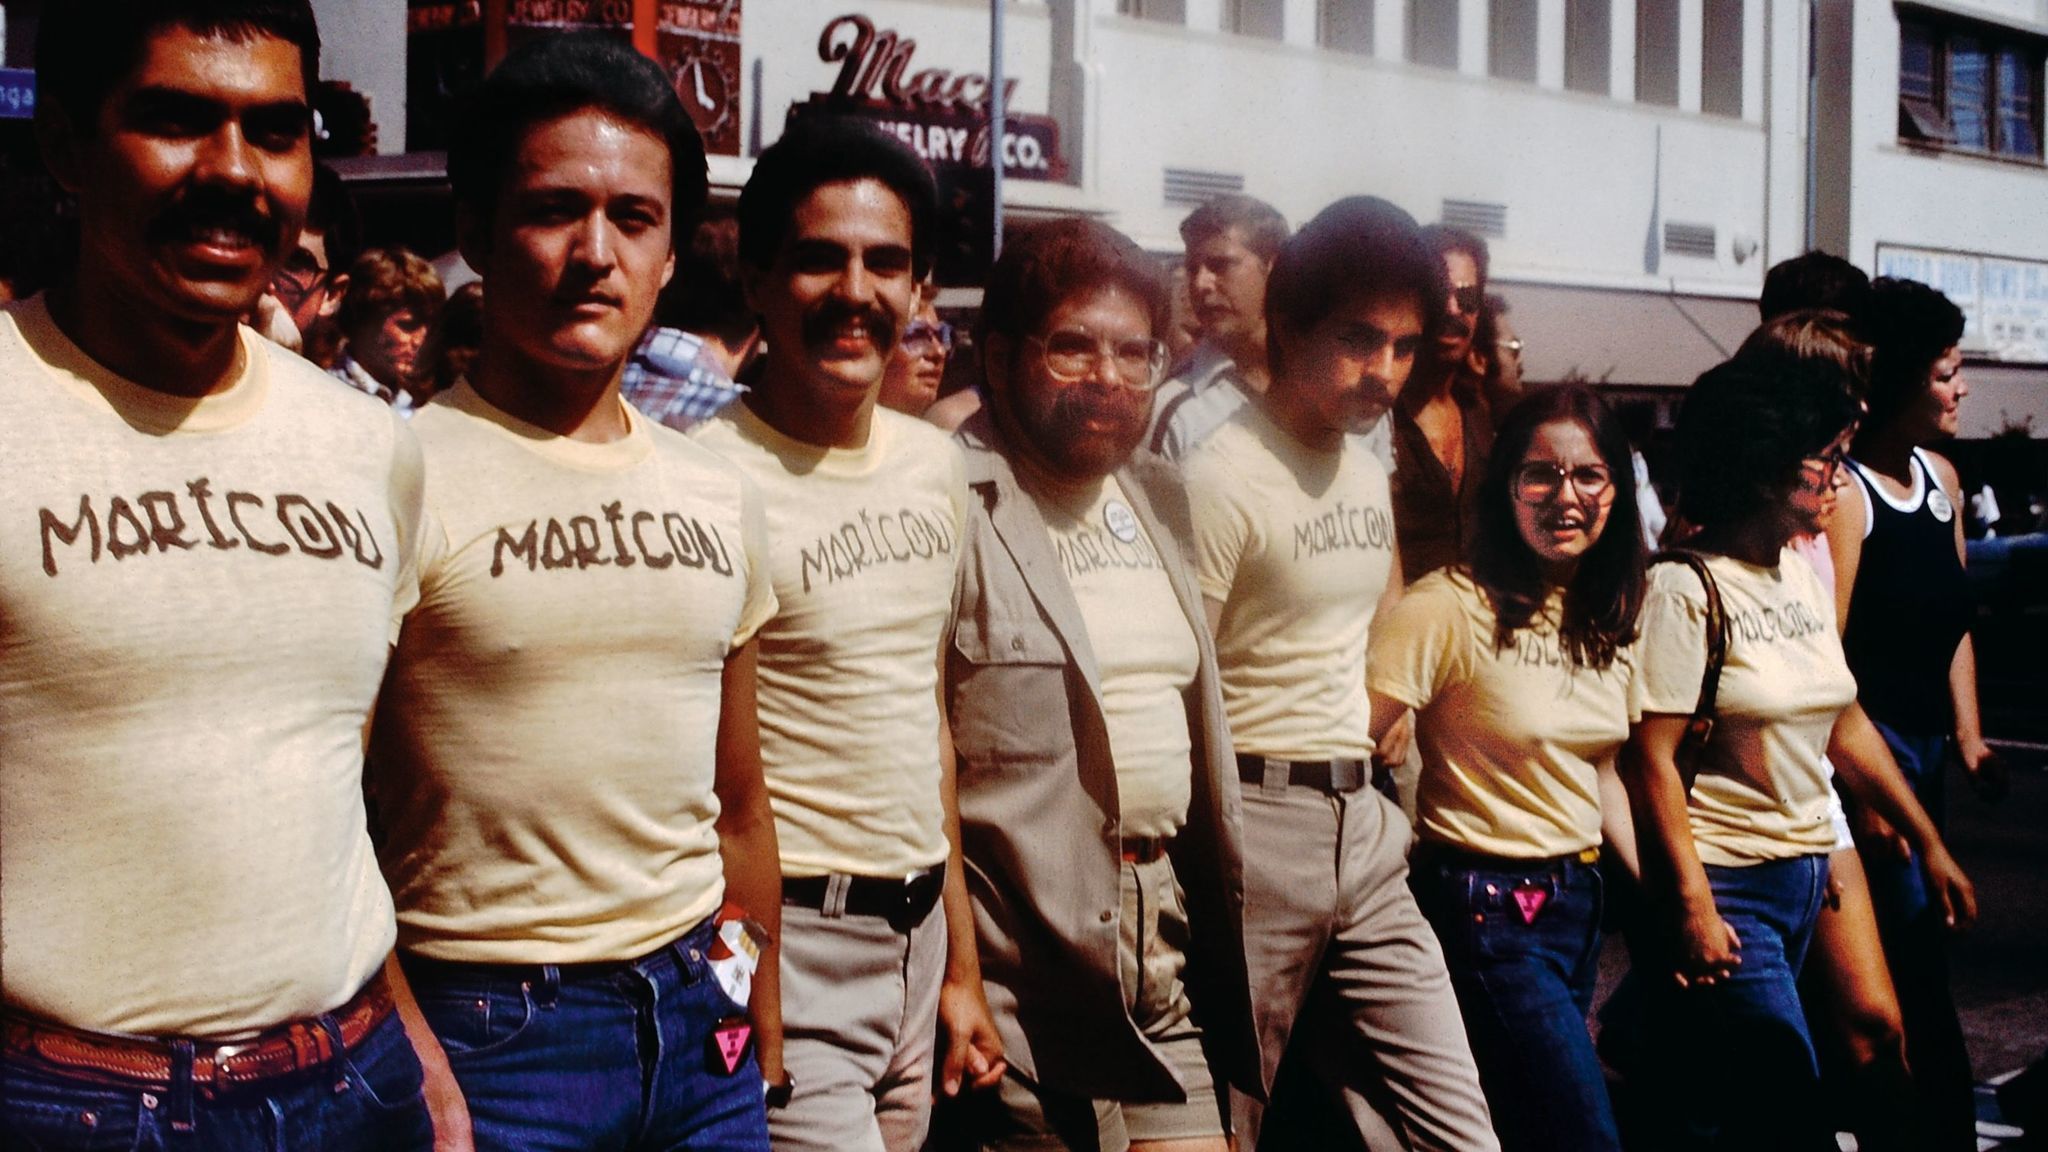 Joey Terrill’s Malflora and Maricón T-shirts